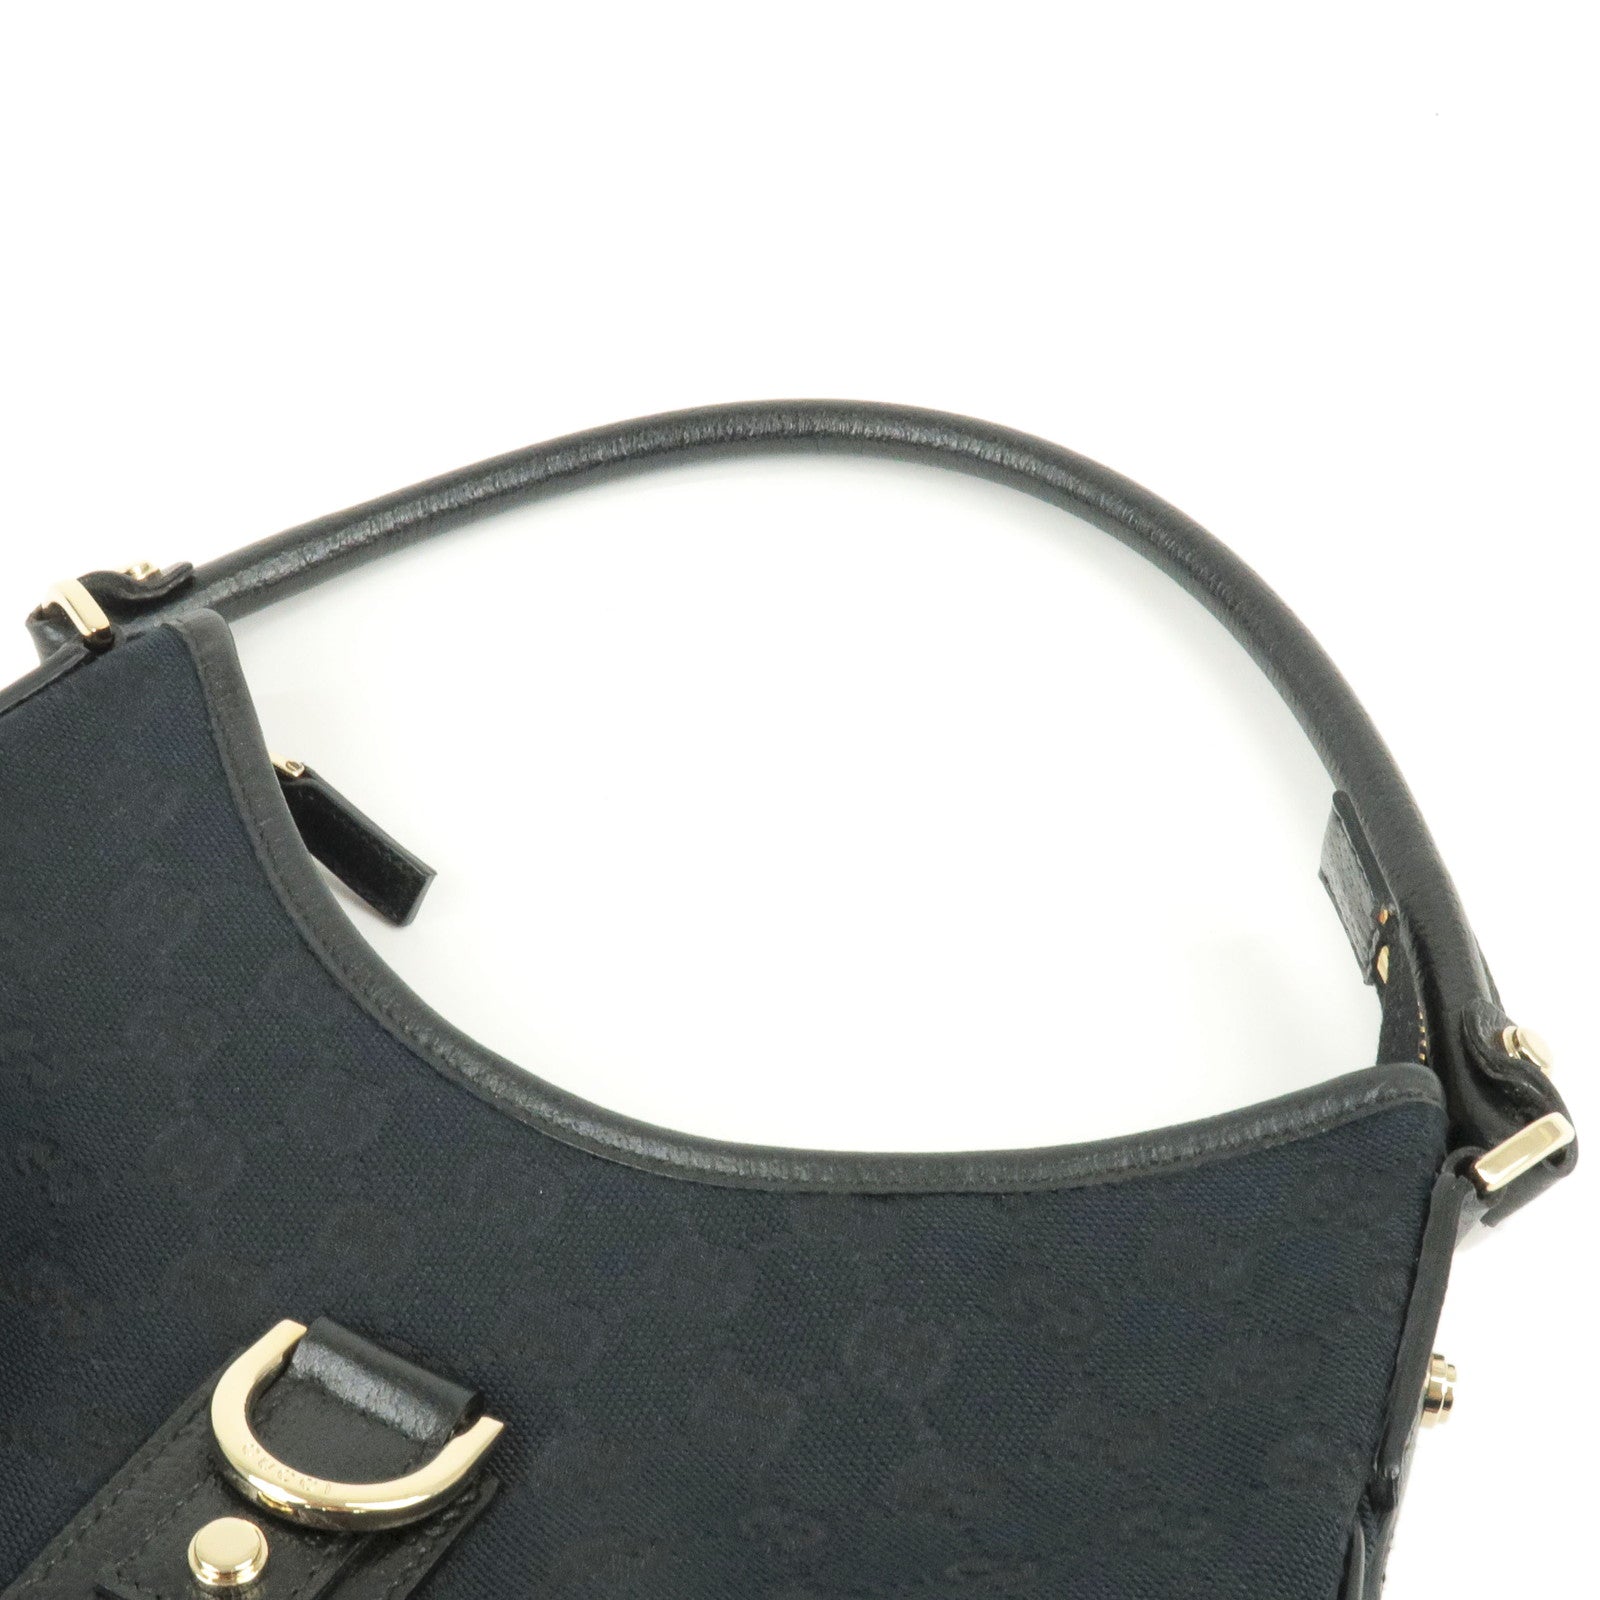 Black Gucci Abbey Shoulder Bag